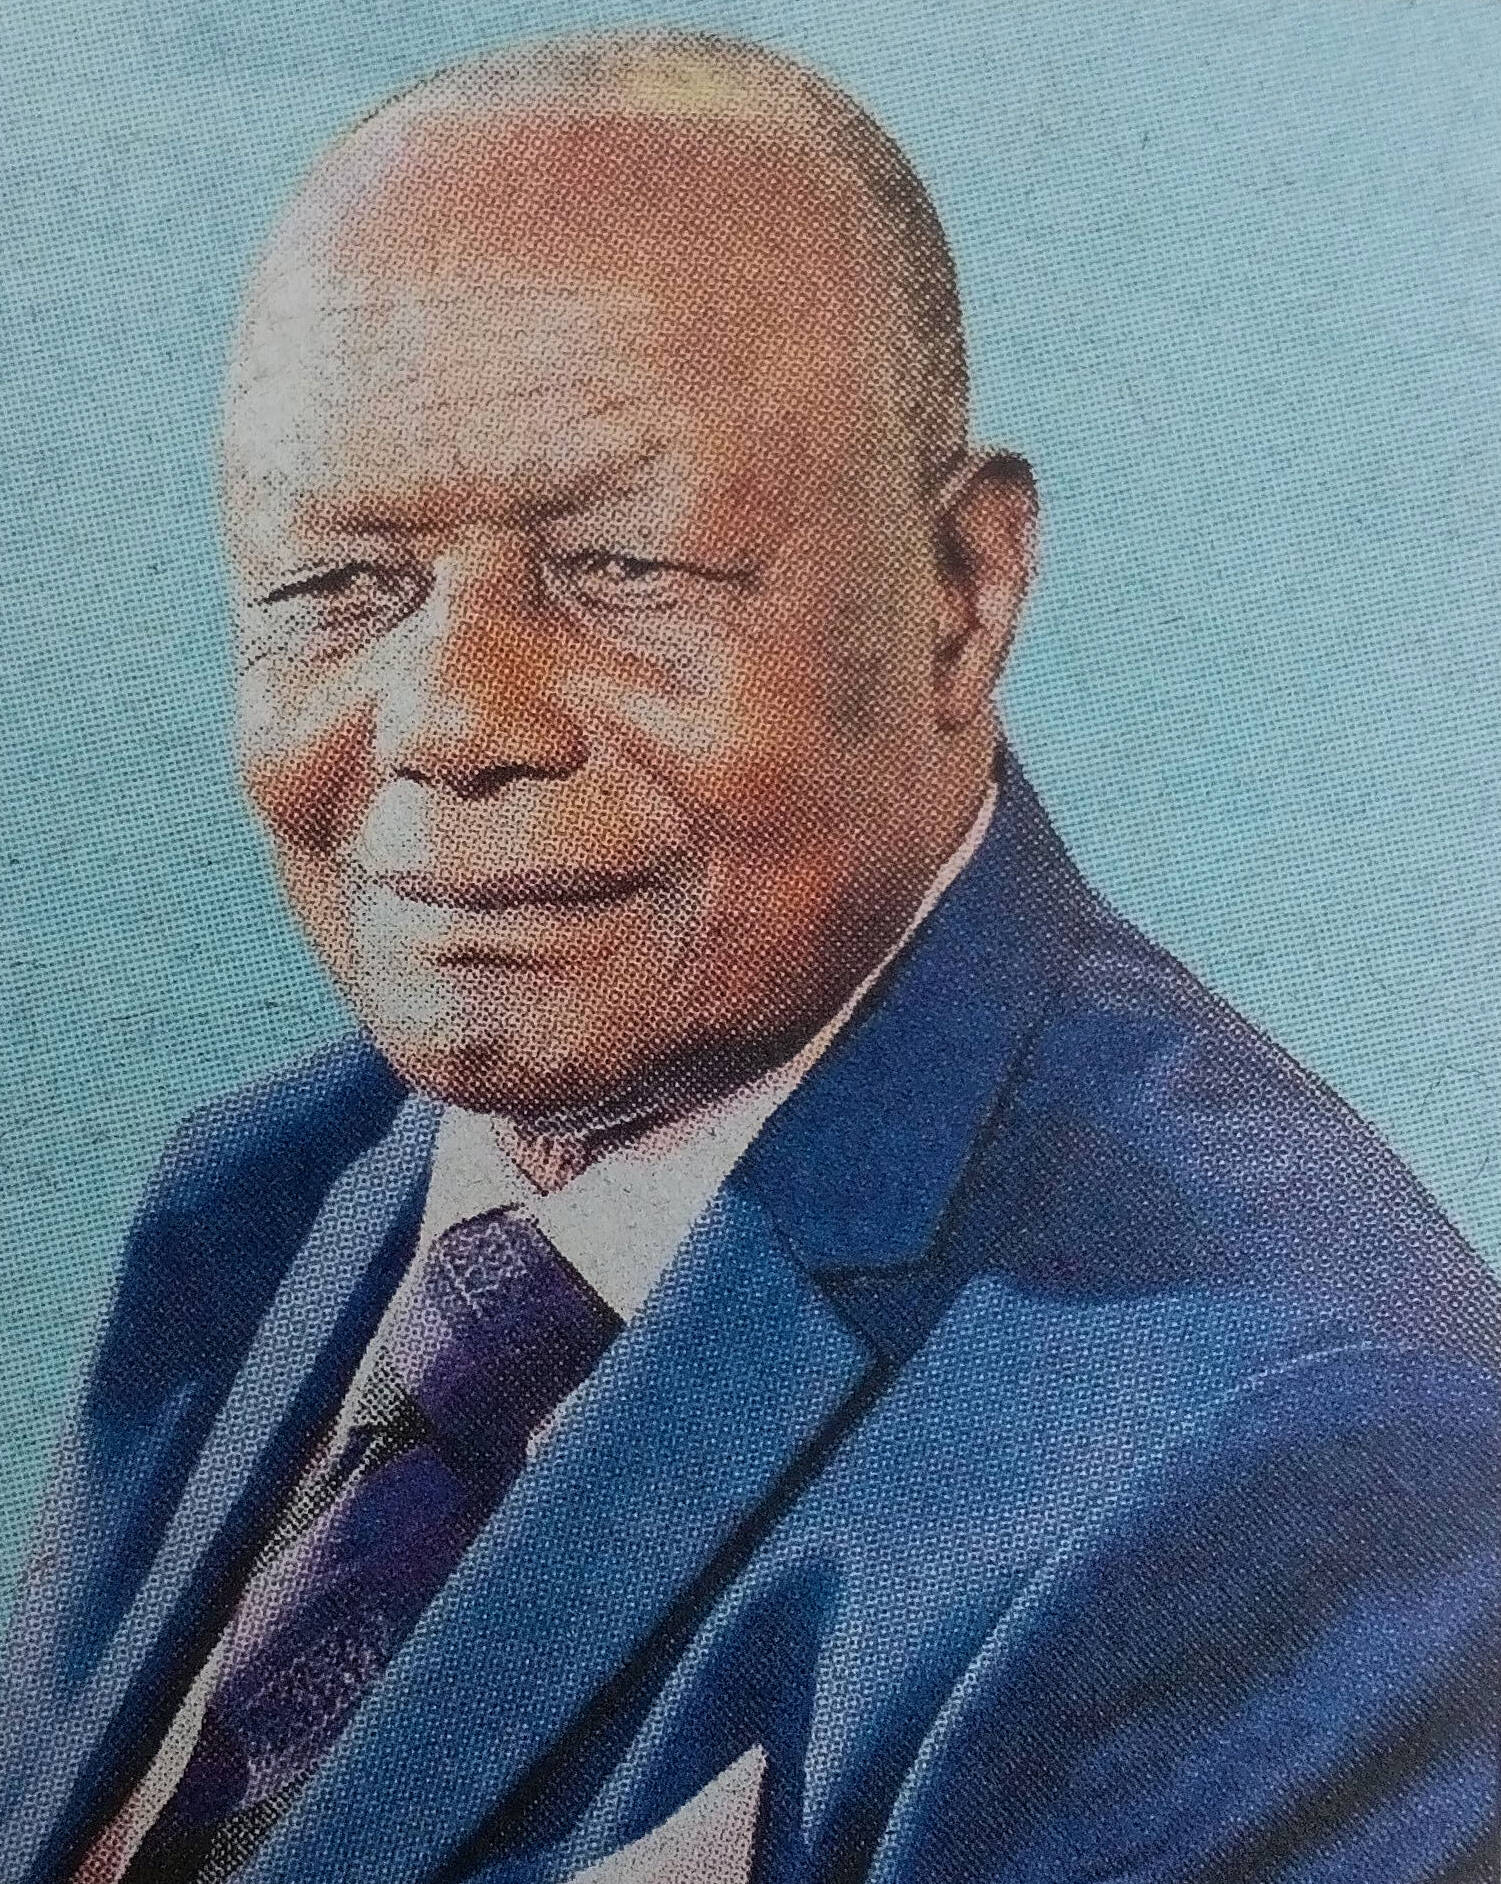 Obituary Image of Francis Baraza Oluoch 1925 - 2/4/2017